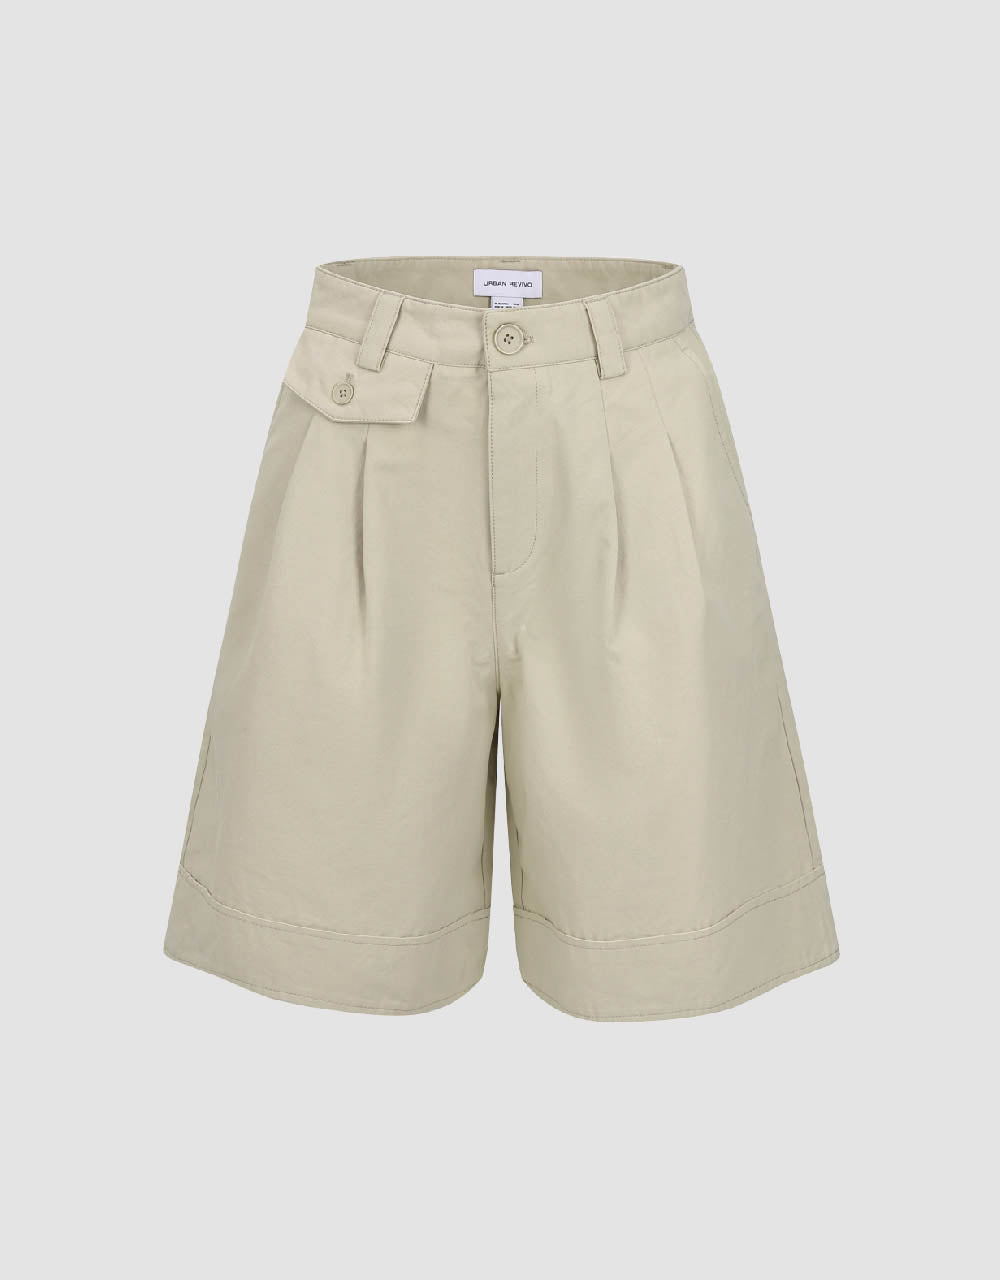 Urban Loose Shorts